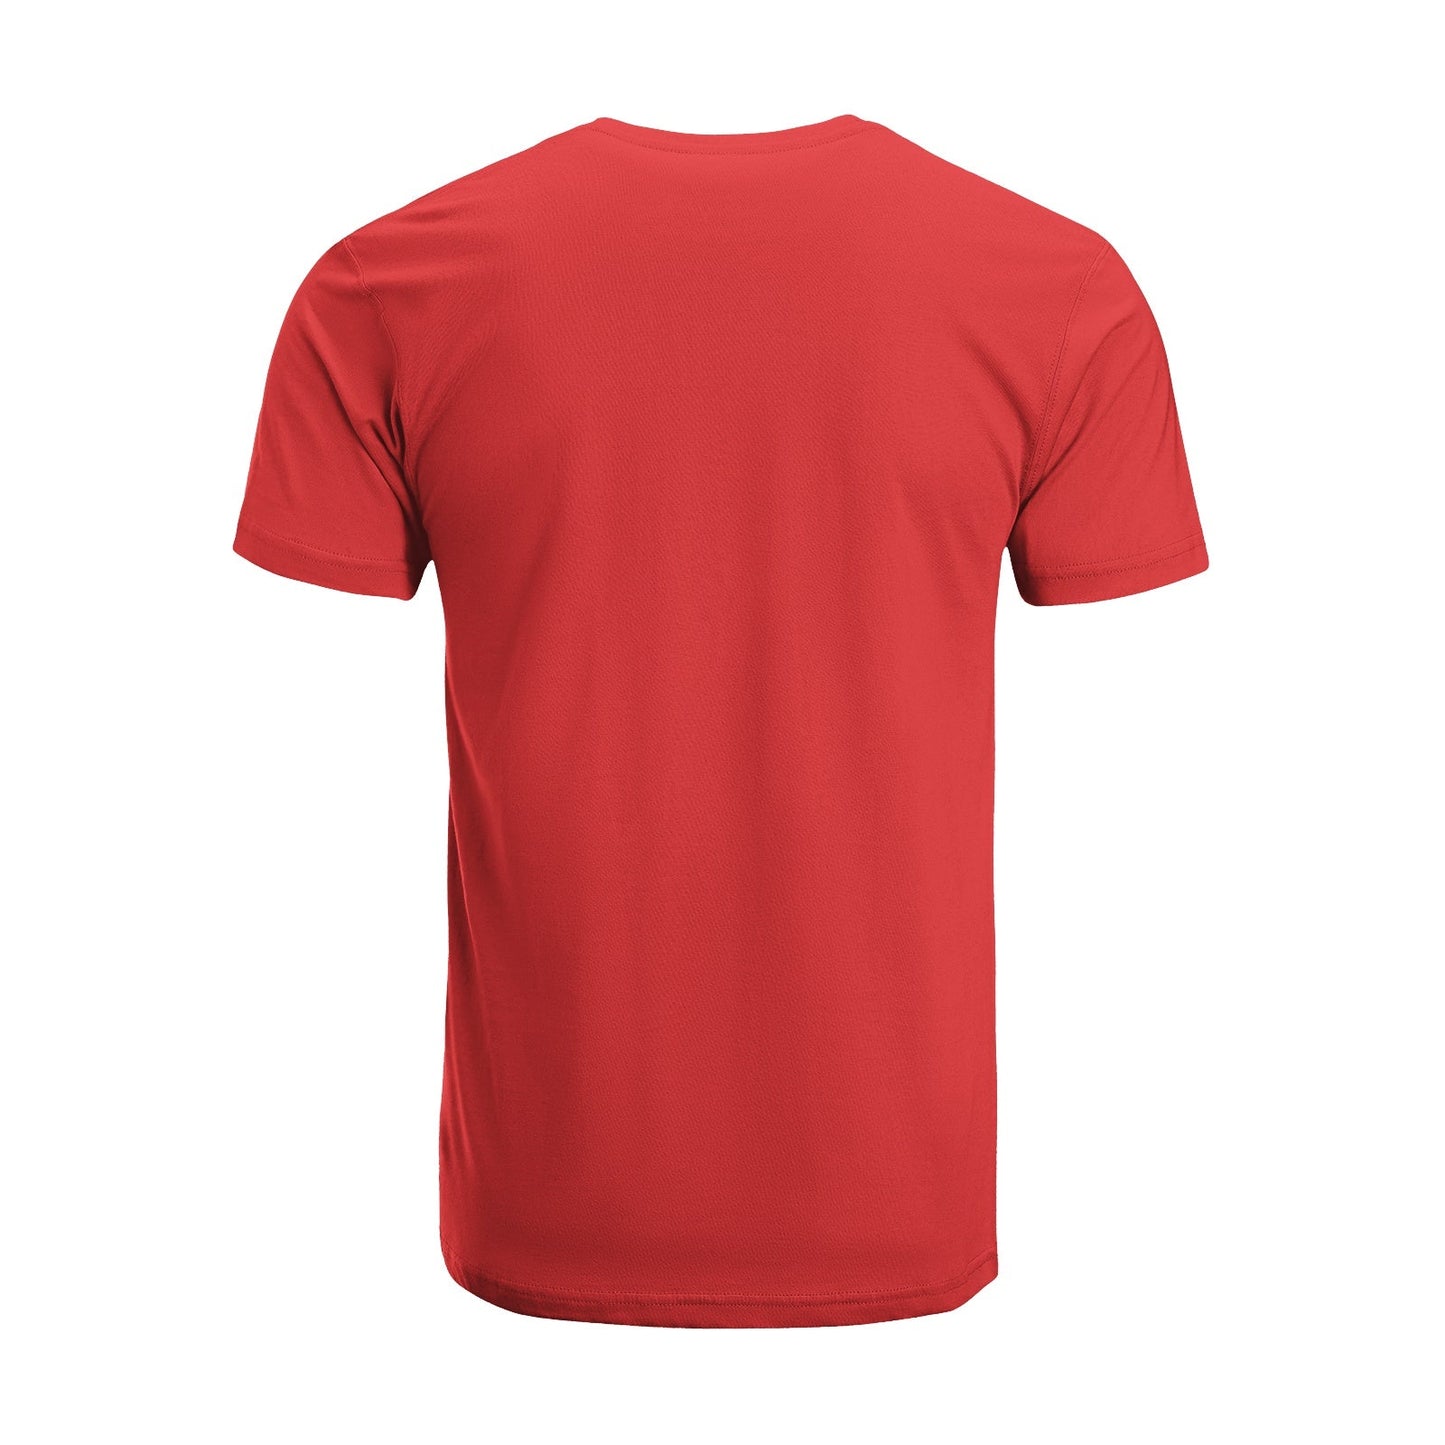 Unisex Short Sleeve Crew Neck Cotton Jersey T-Shirt Gym No. 27 - Tara-Outfits.com